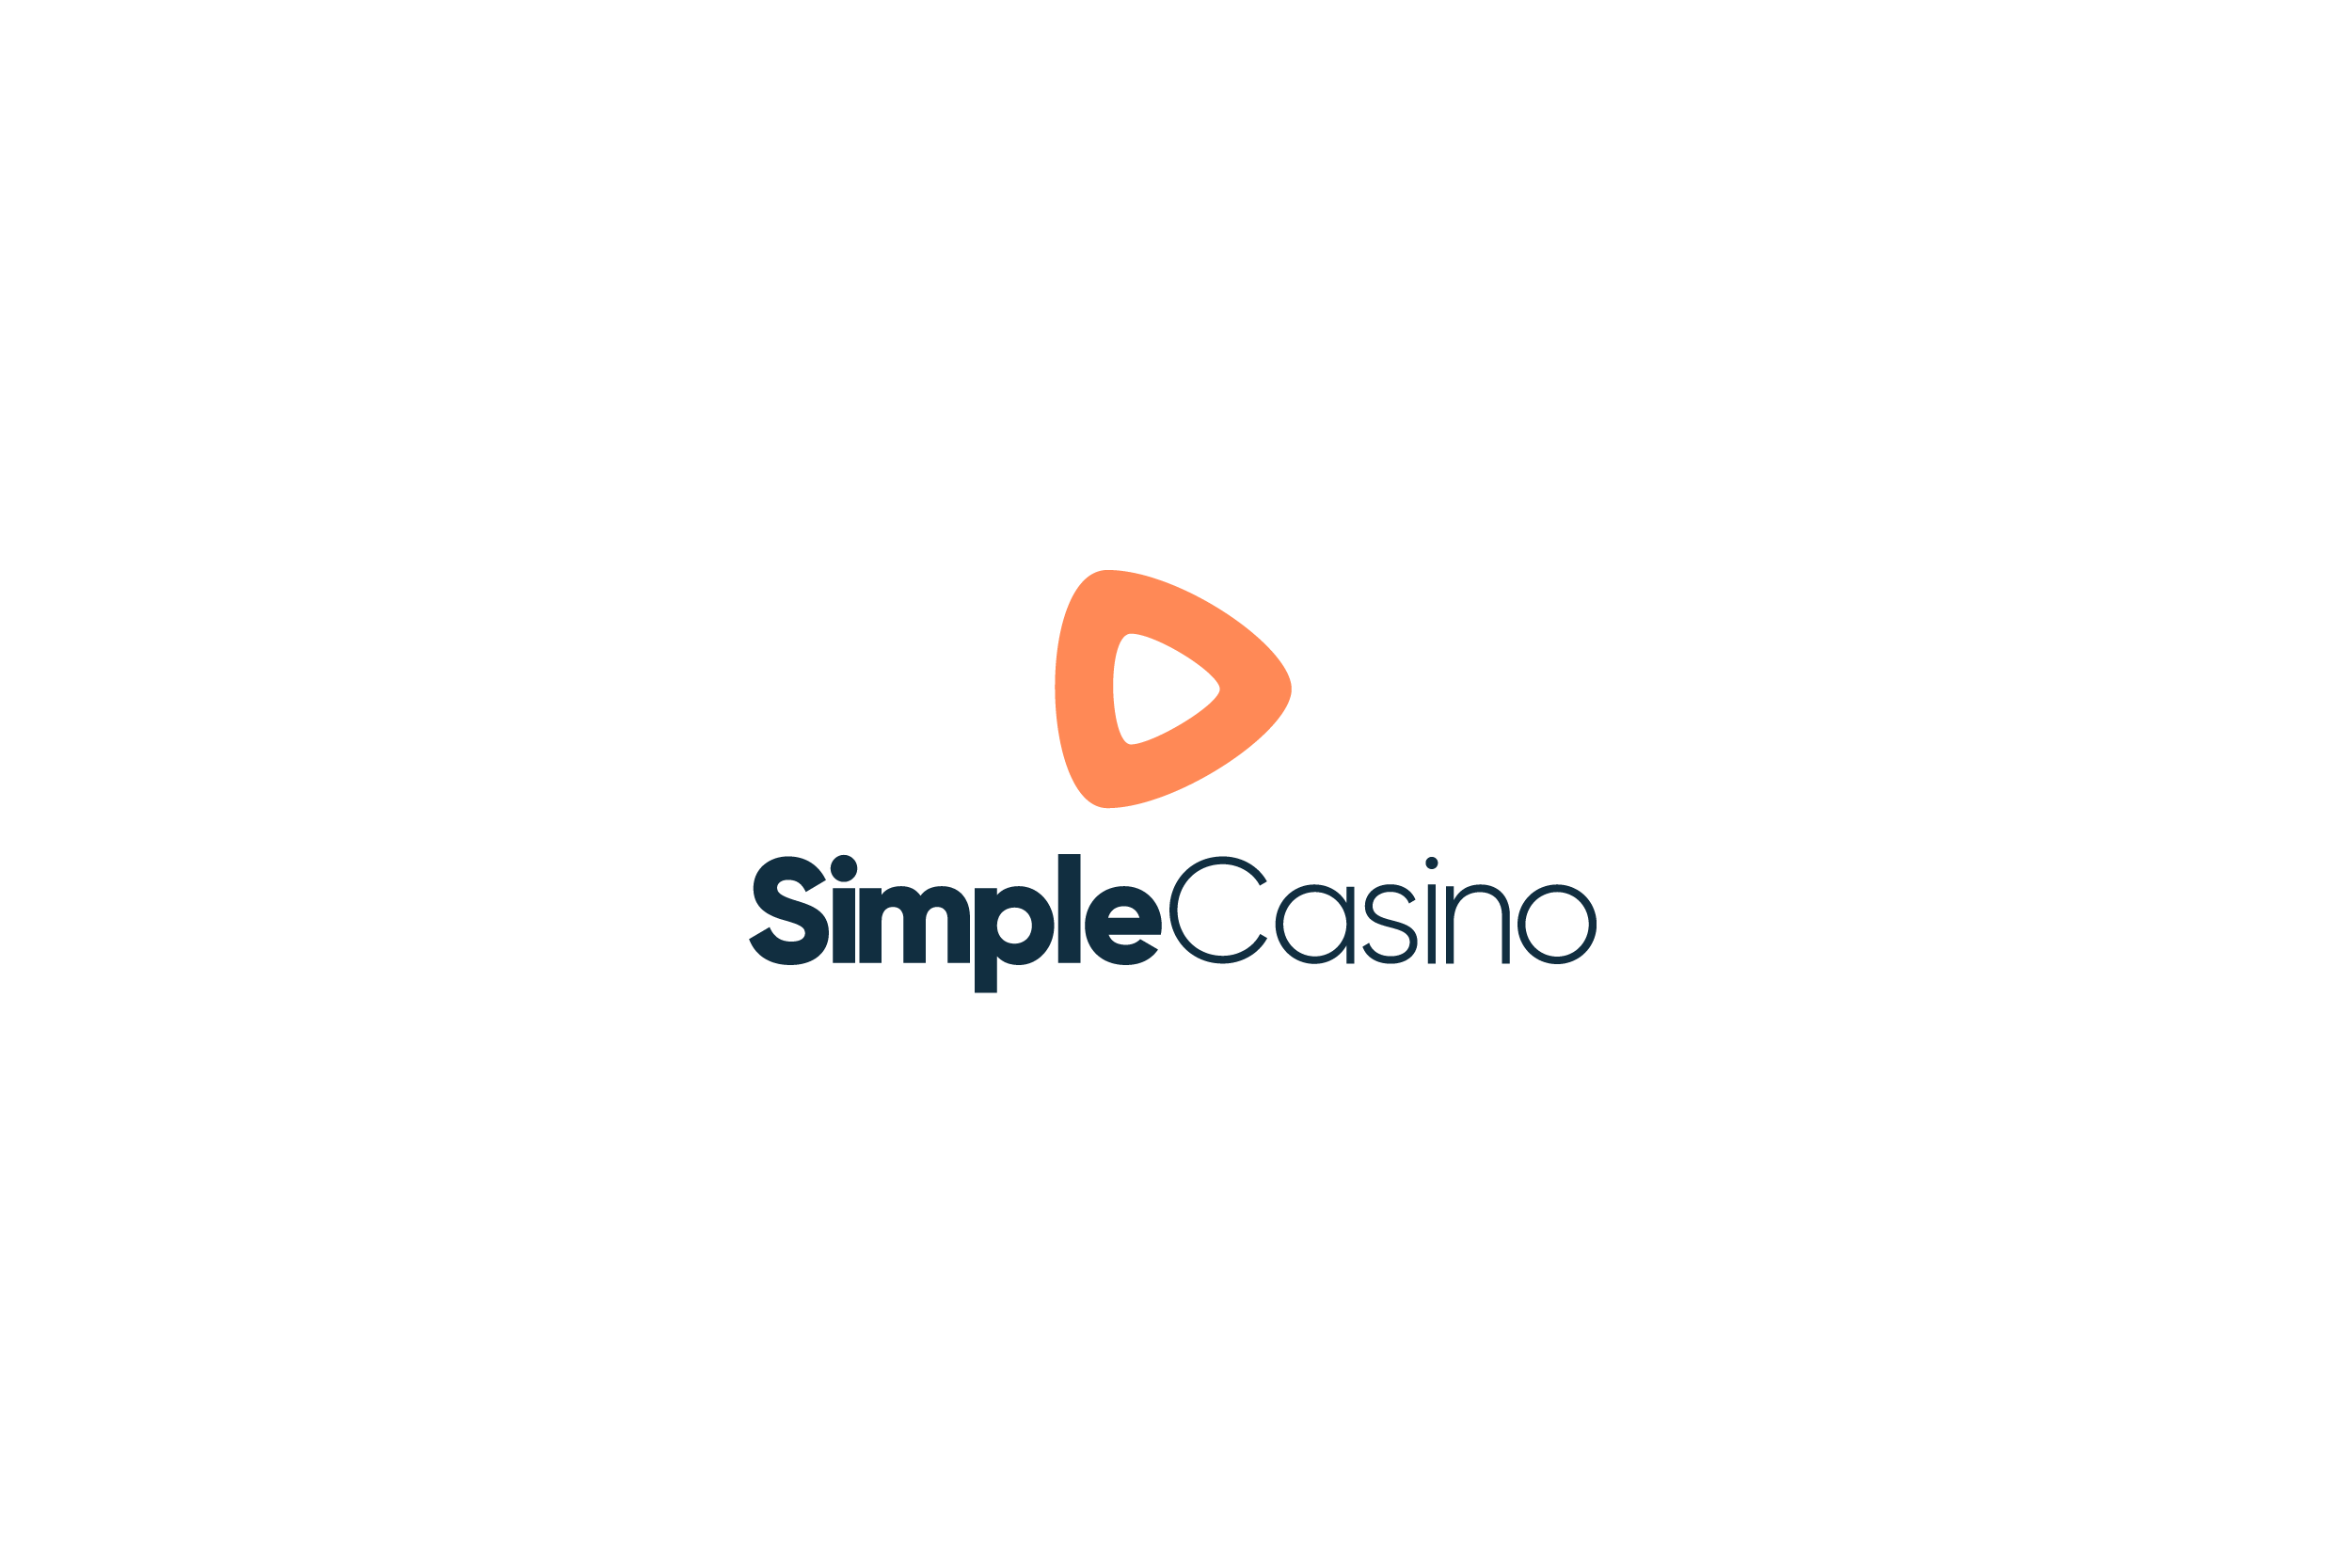 New Brand: Simple Casino